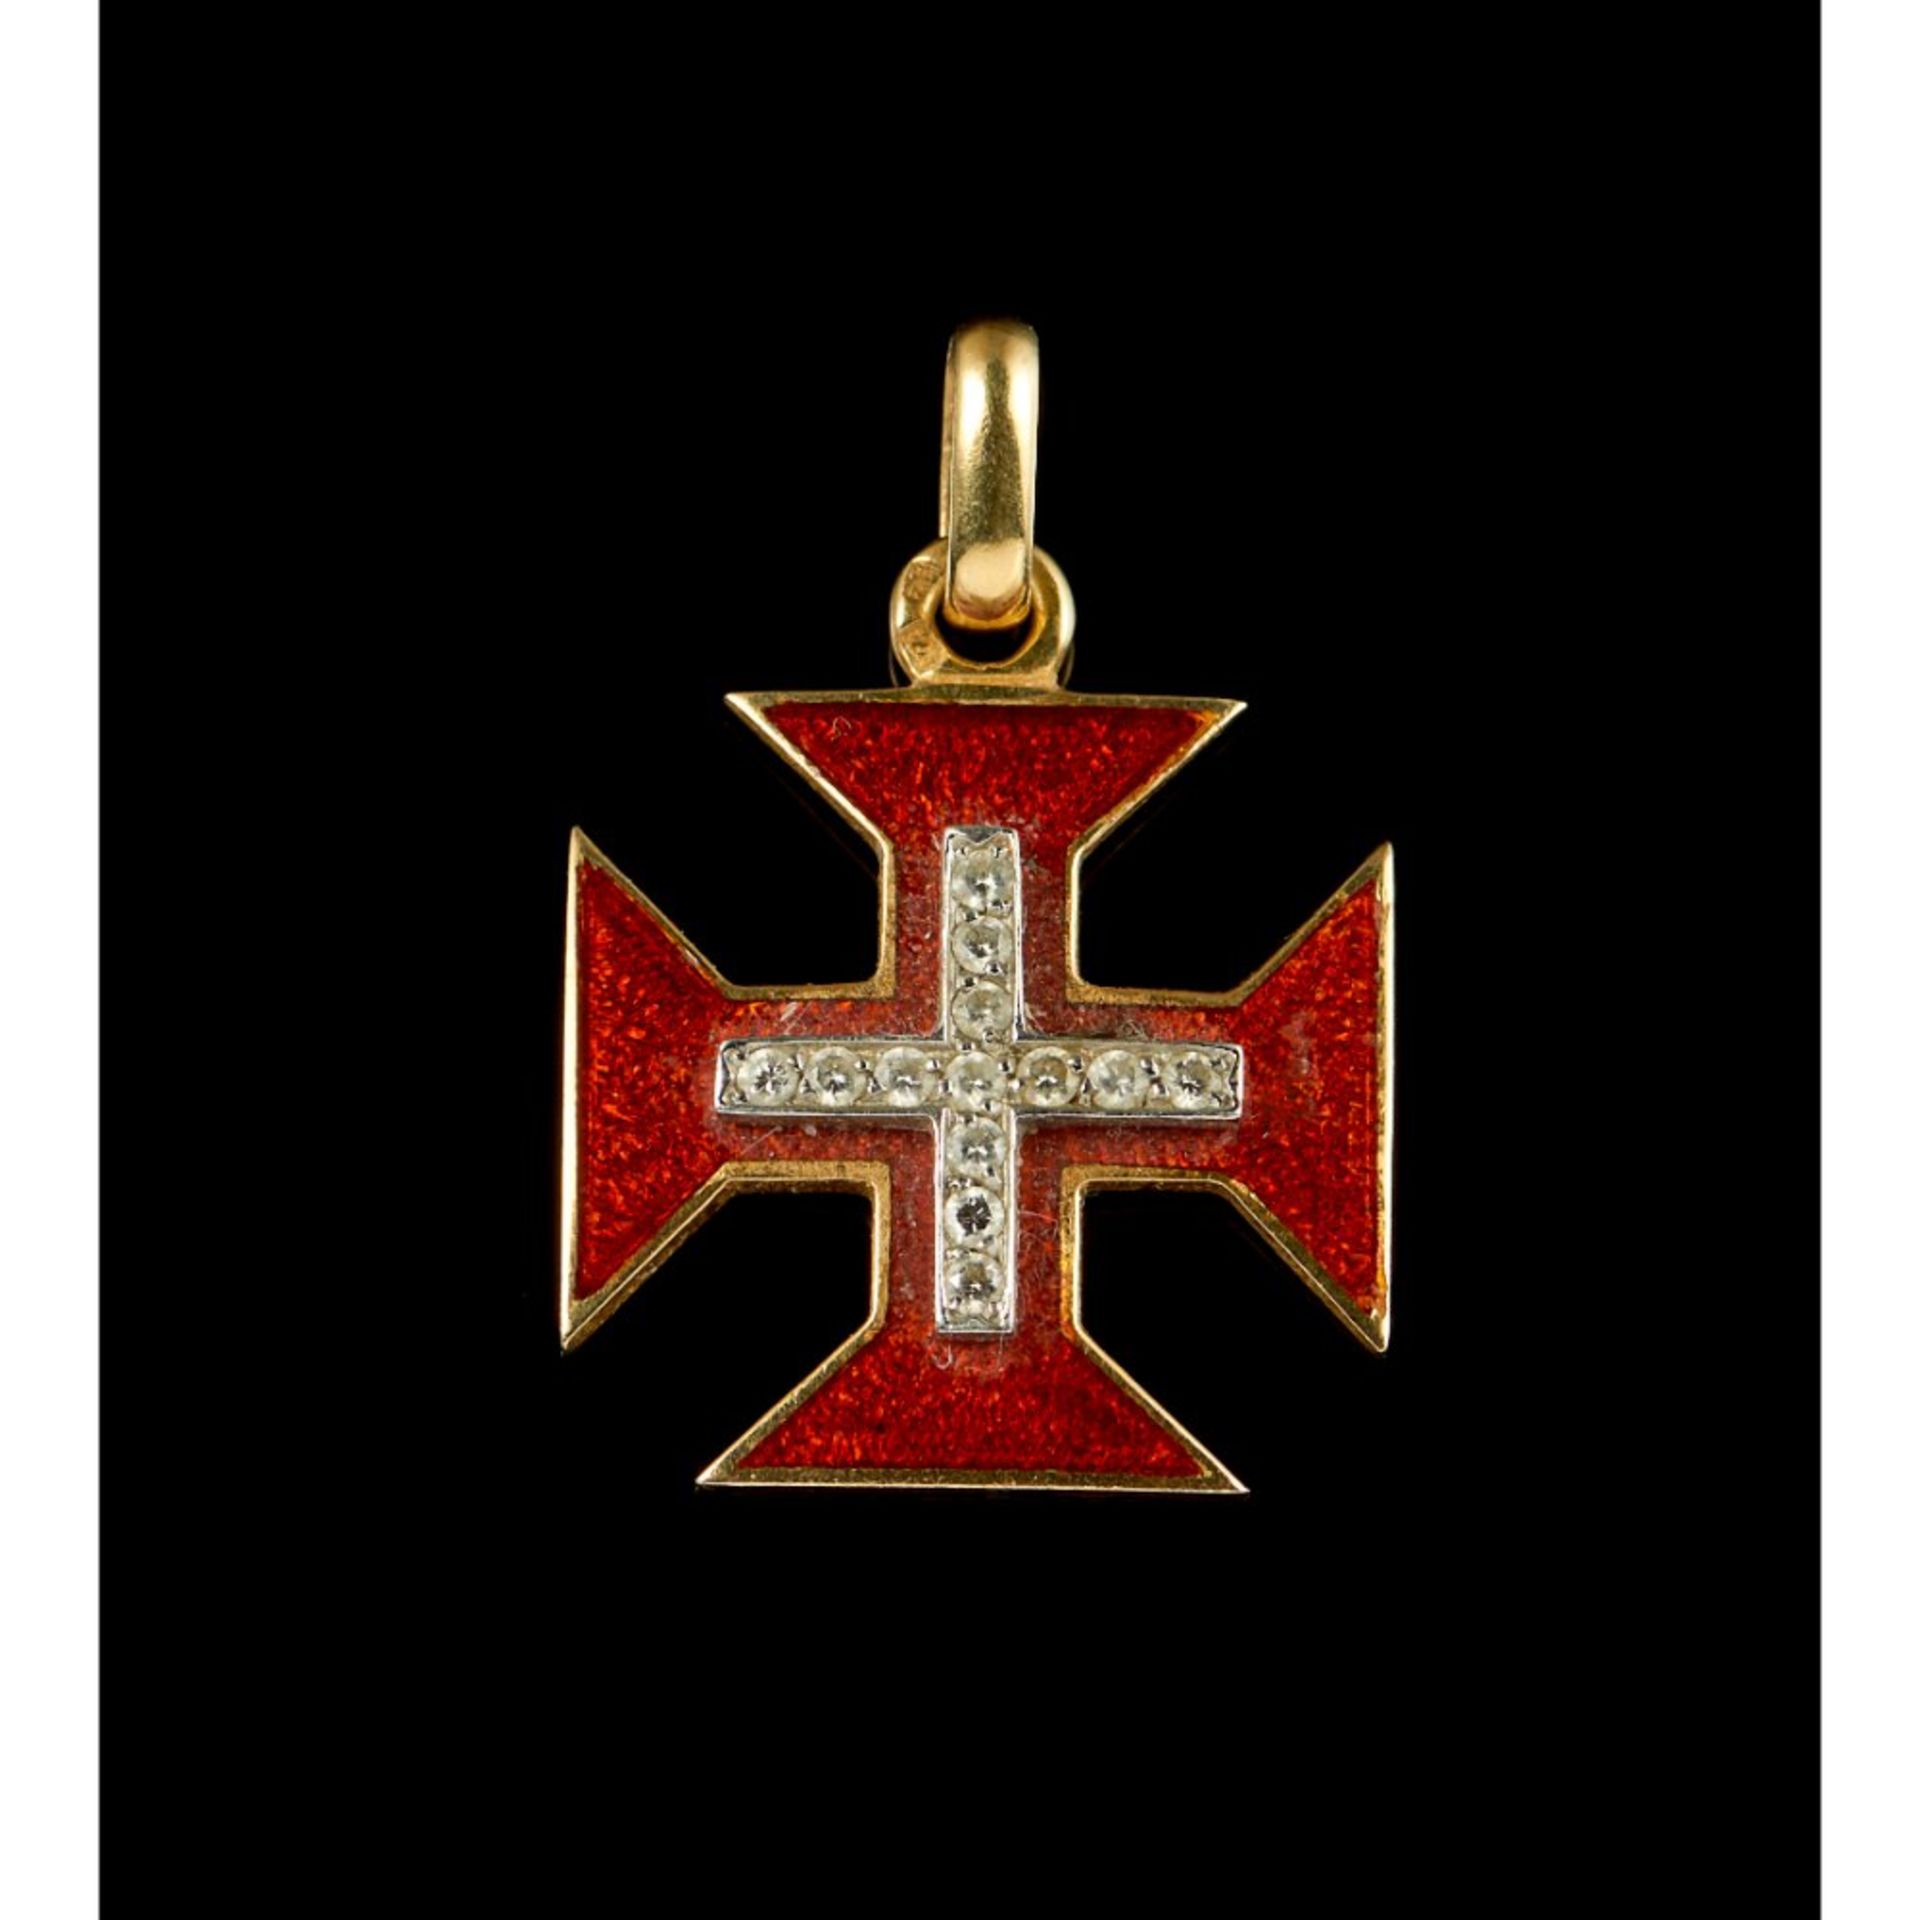 A Cross of Christ pendant